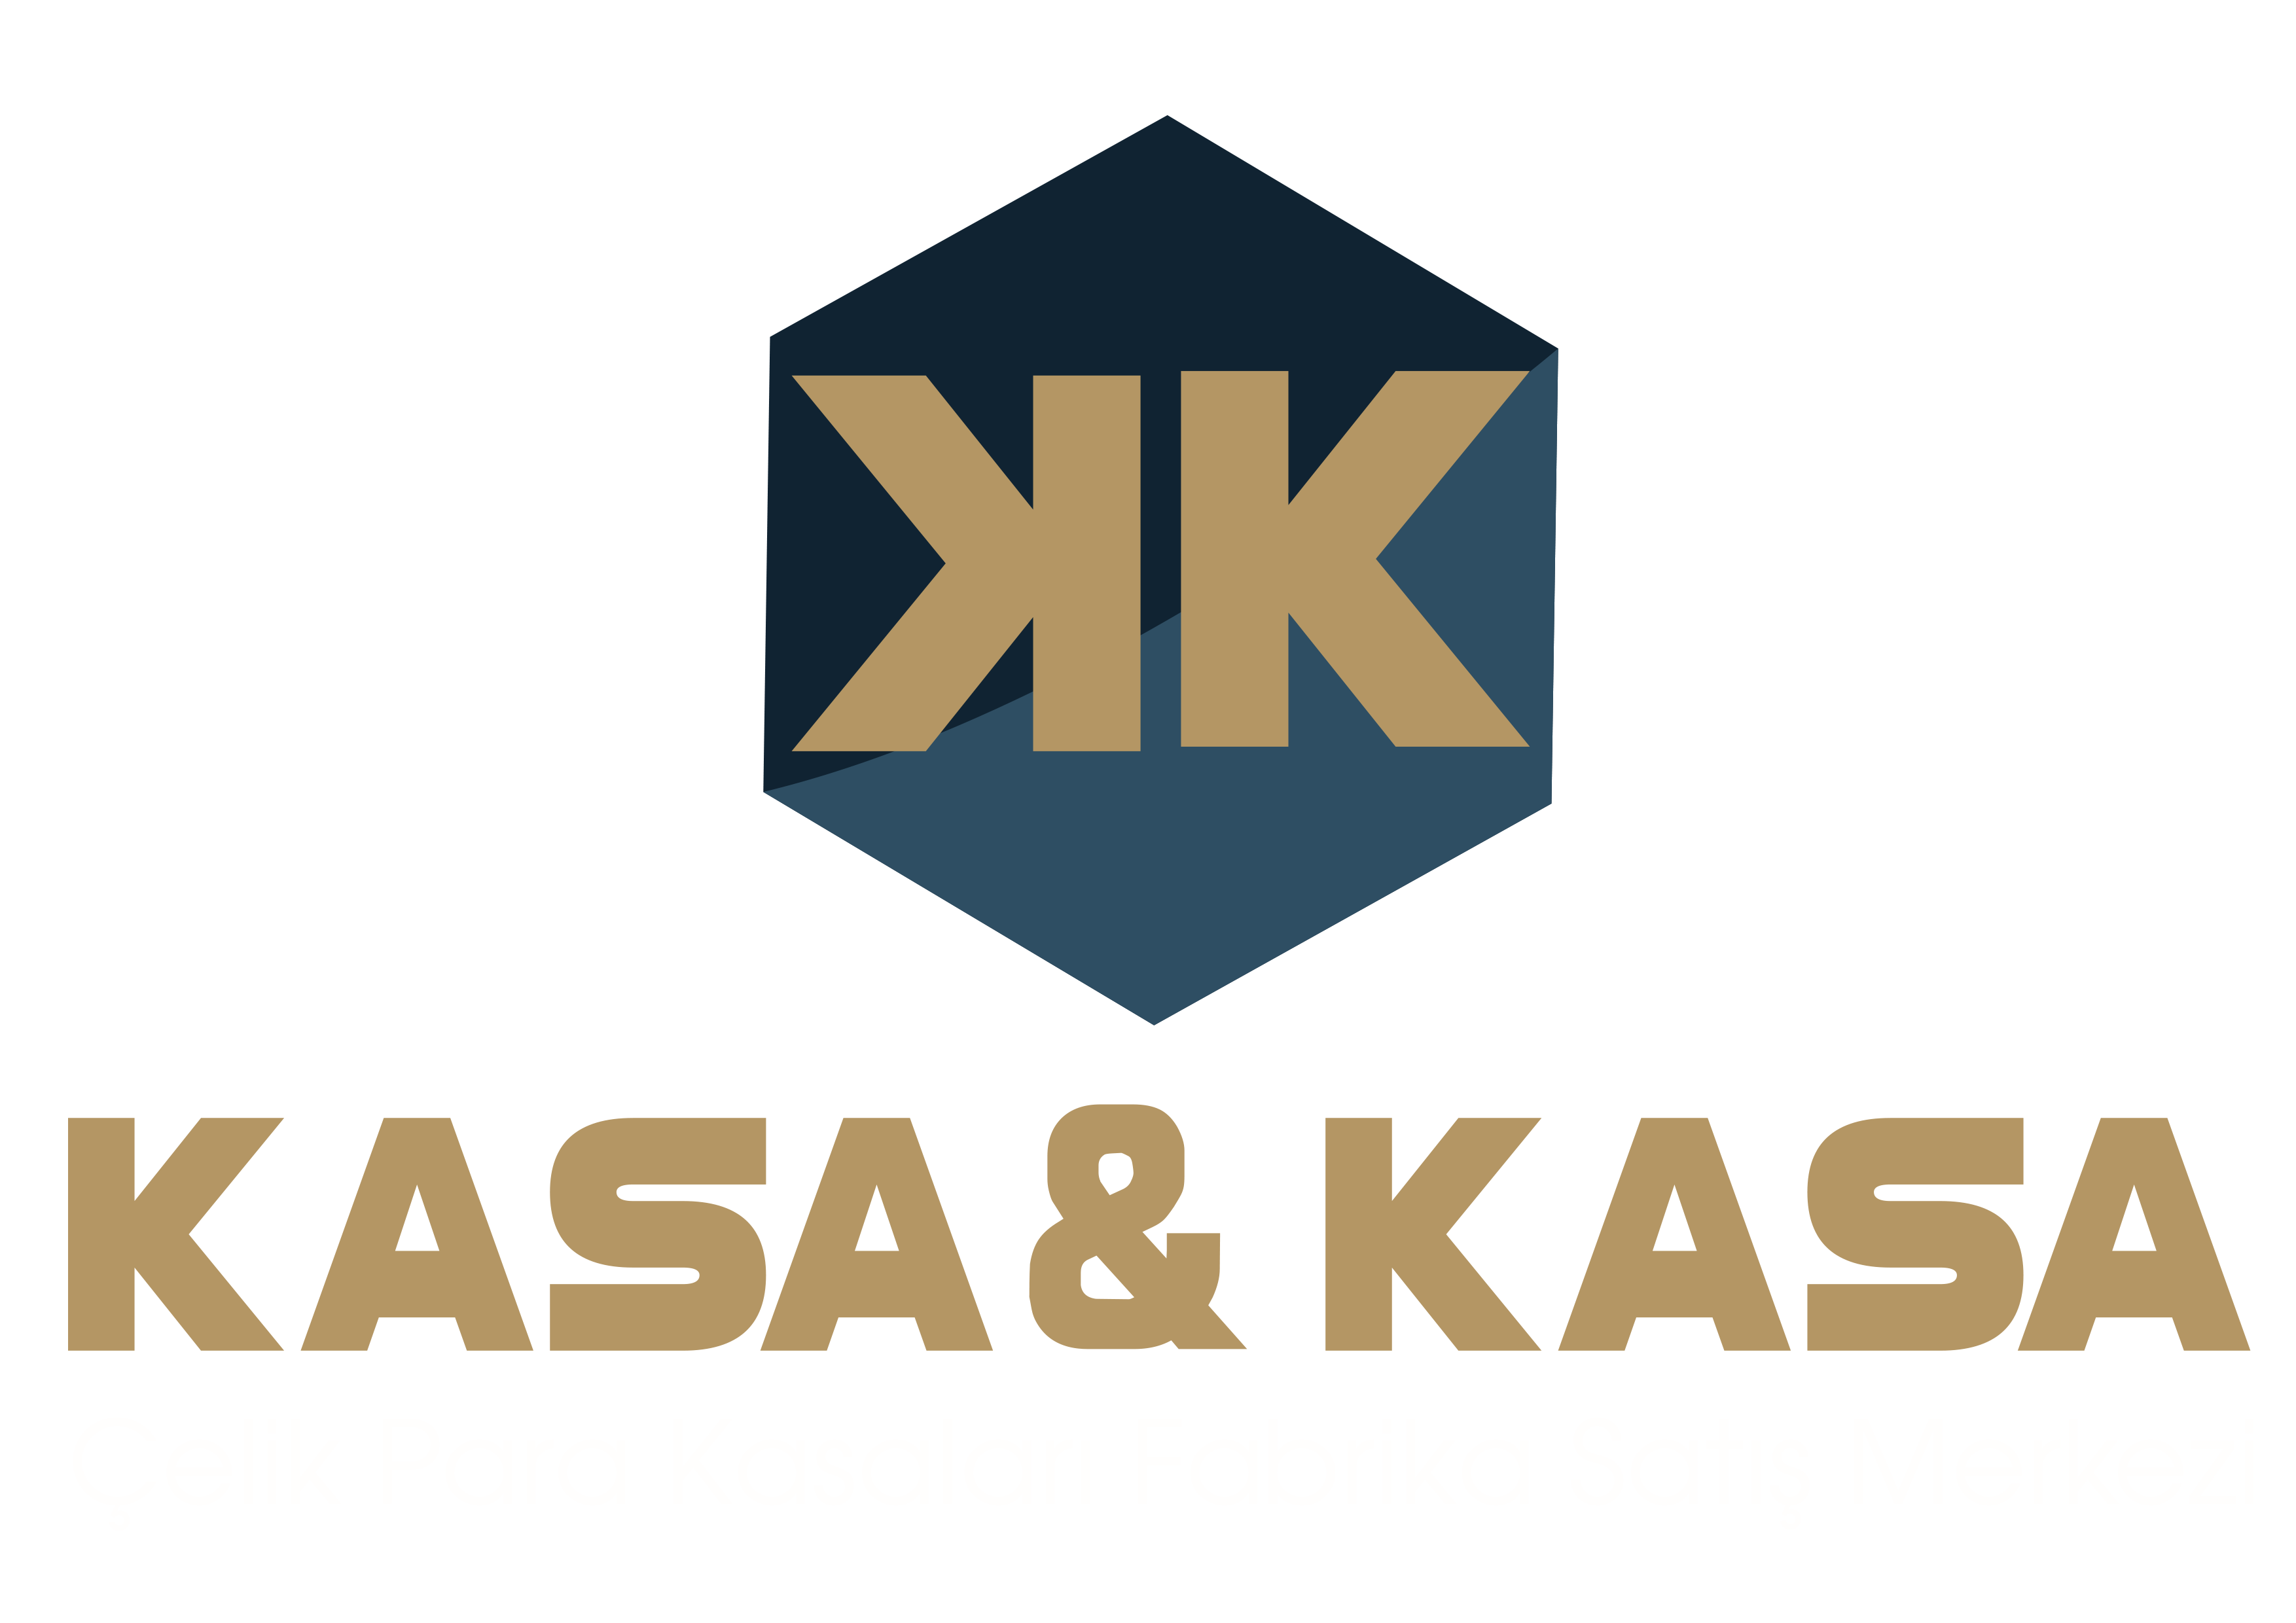 Kasaburada.com